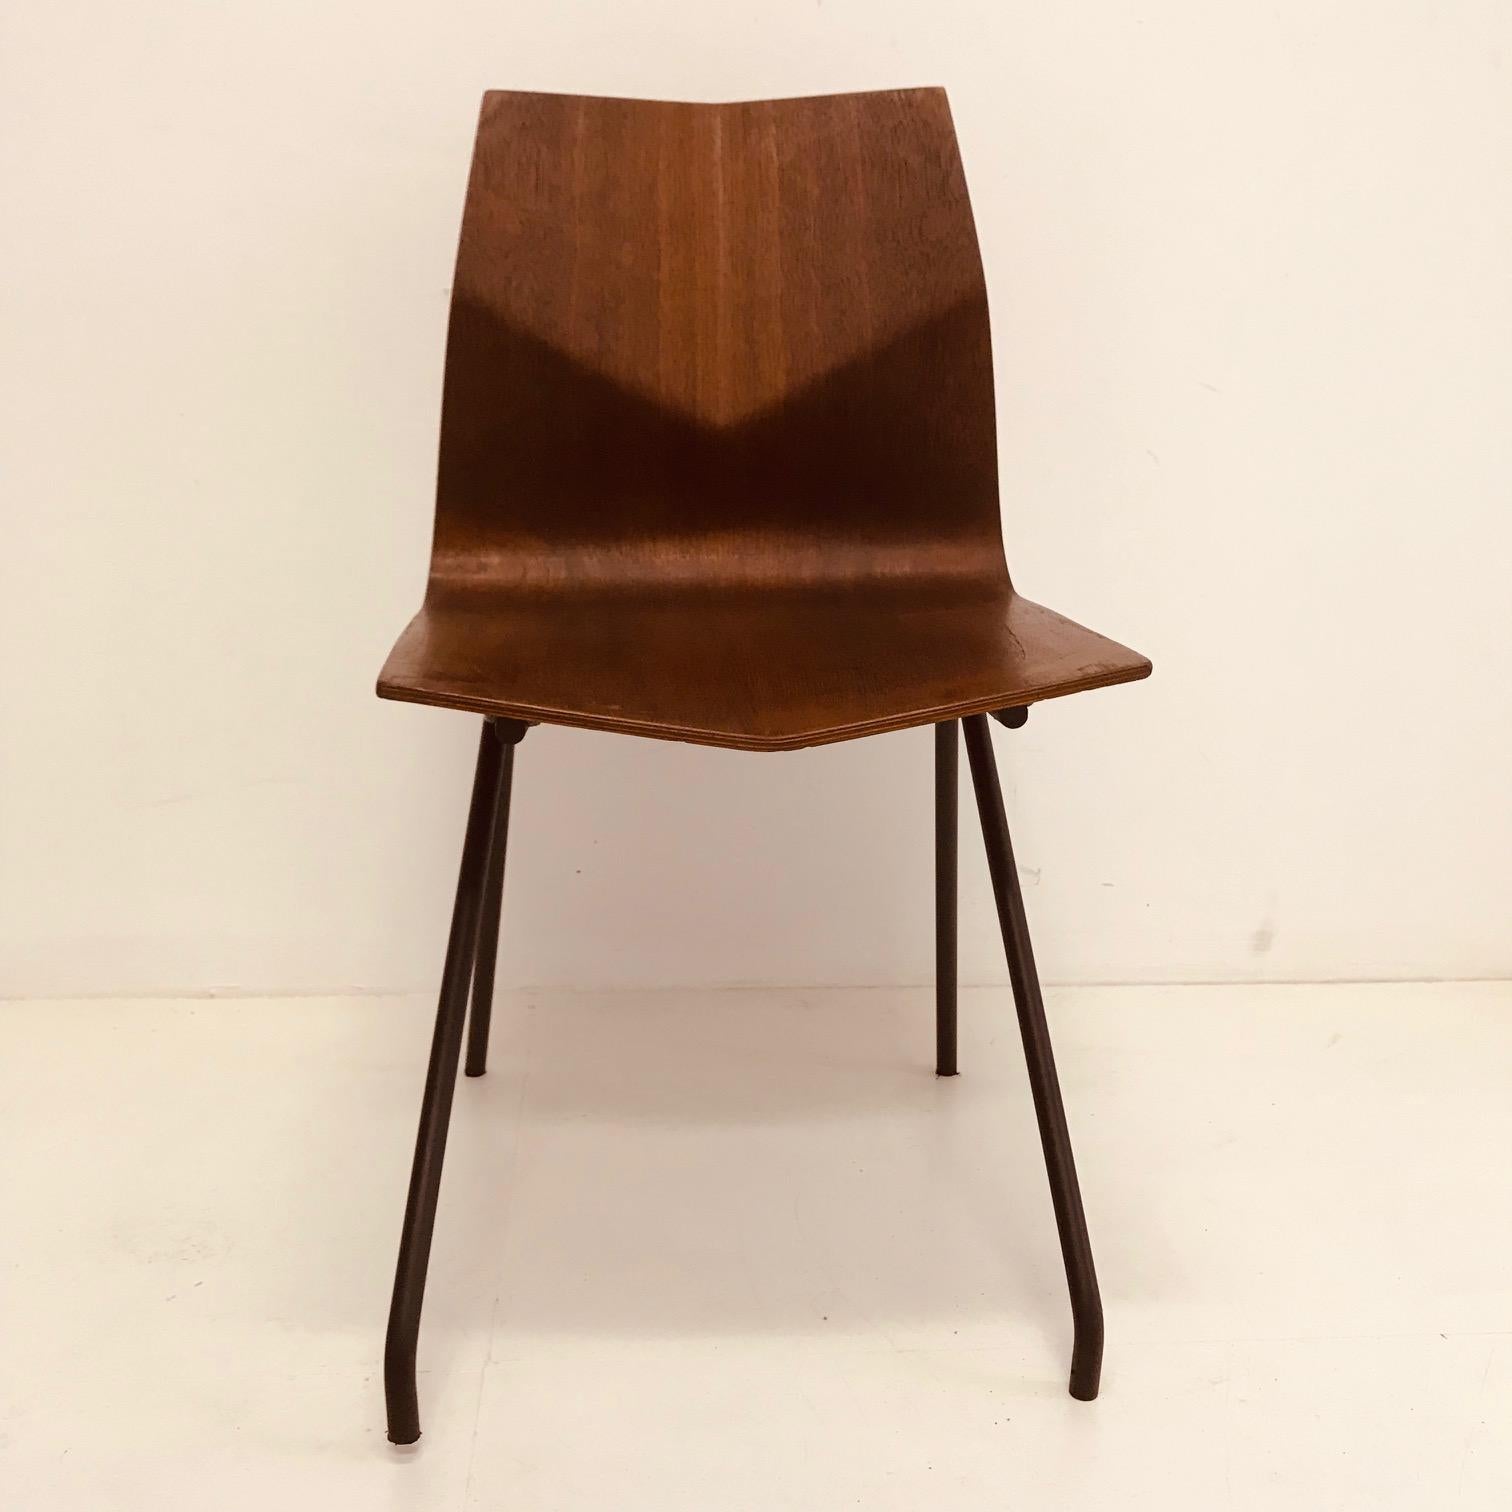 René-Jean Caillette
Diamond chair 
Edition Steiner
Elm veneered molded plywood, 
steel 31.5 x 18.11 x 17.32 in.